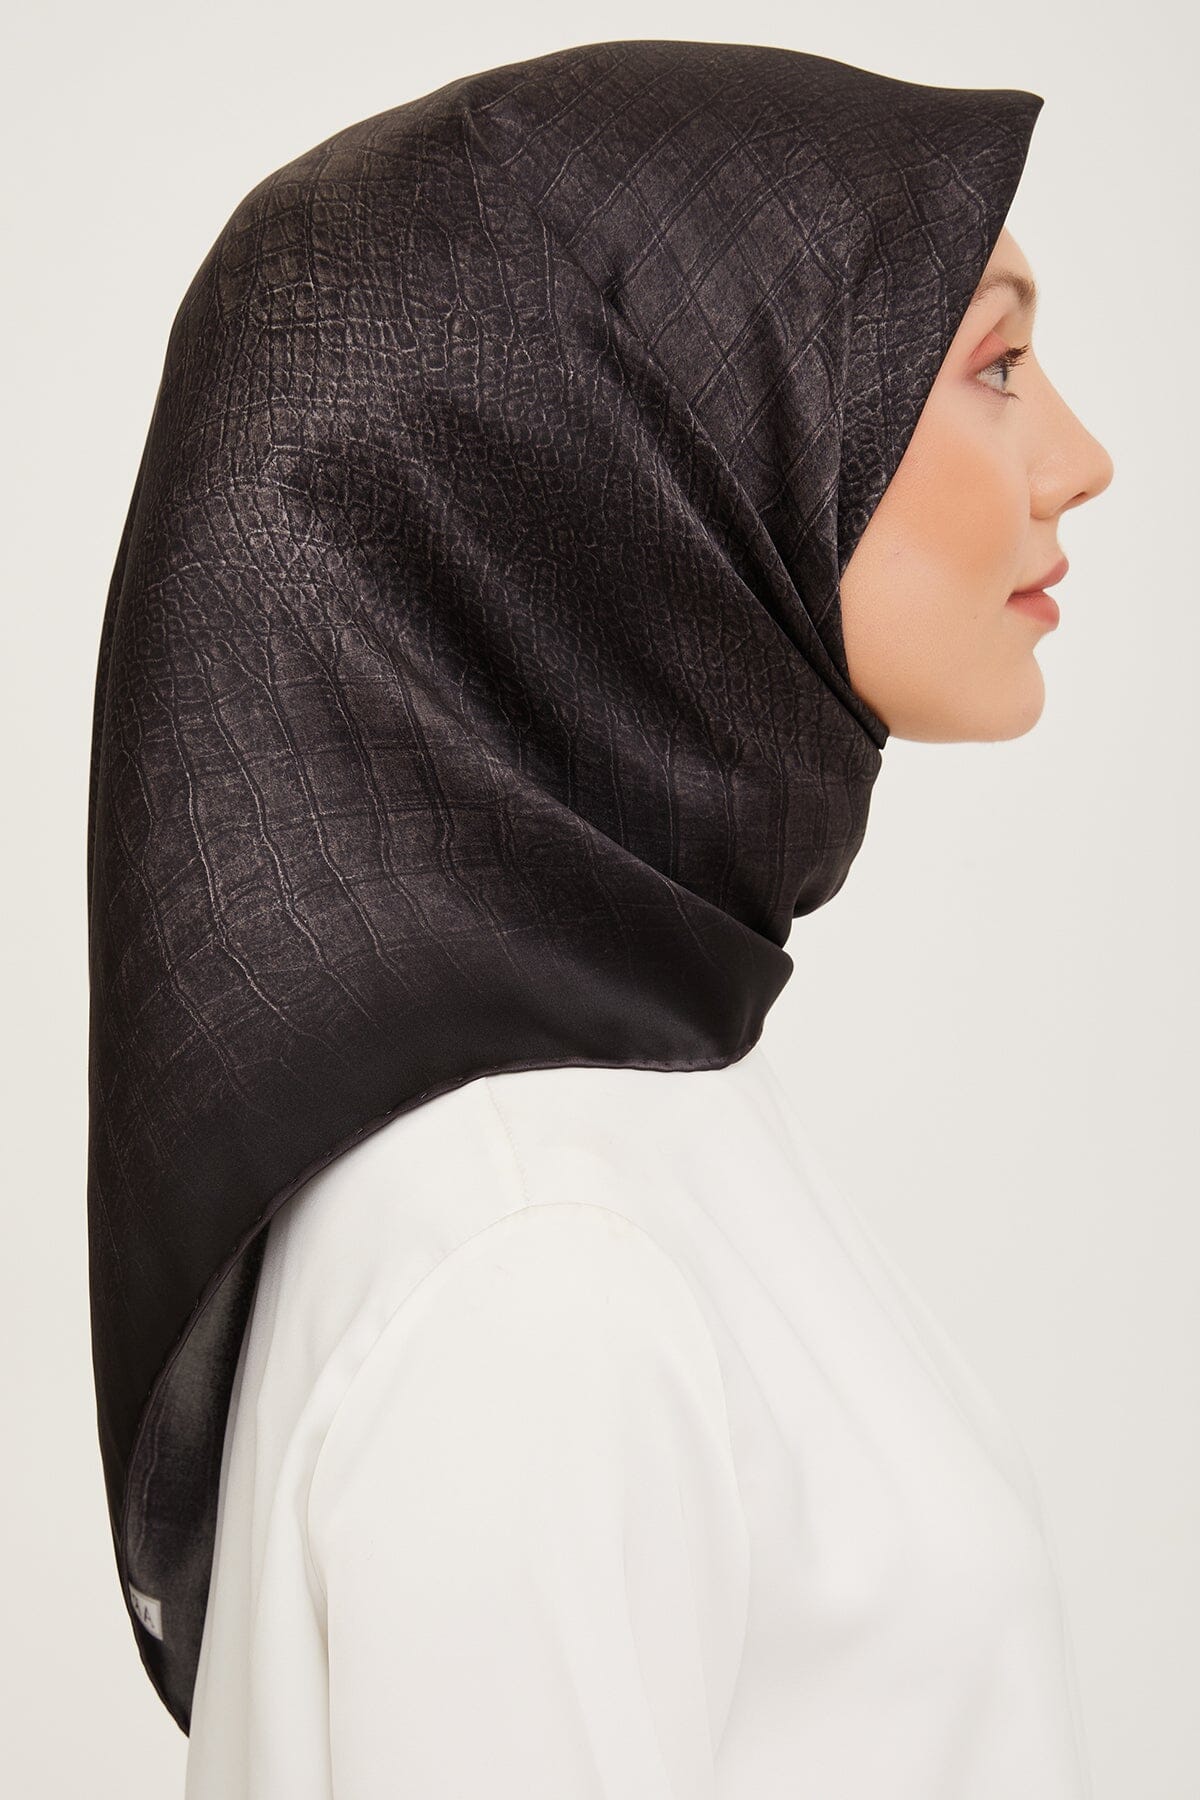 Armine Kempinski Classy Silk Scarf #51 Silk Hijabs,Armine Armine 